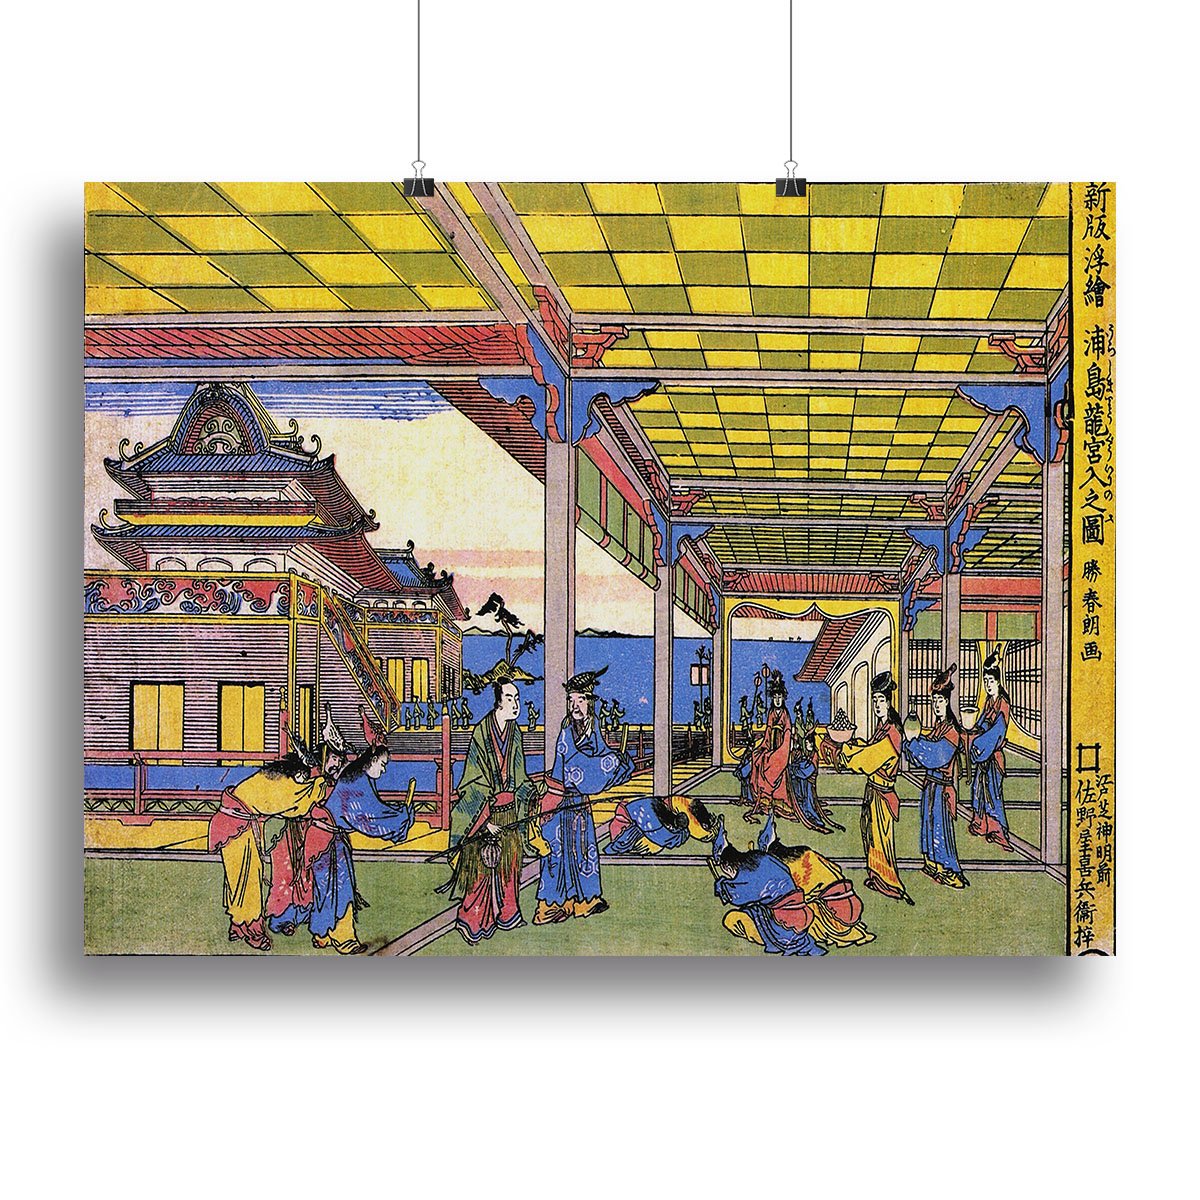 Advent of Urashima at the Dragon palace by Hokusai Canvas Print or Poster